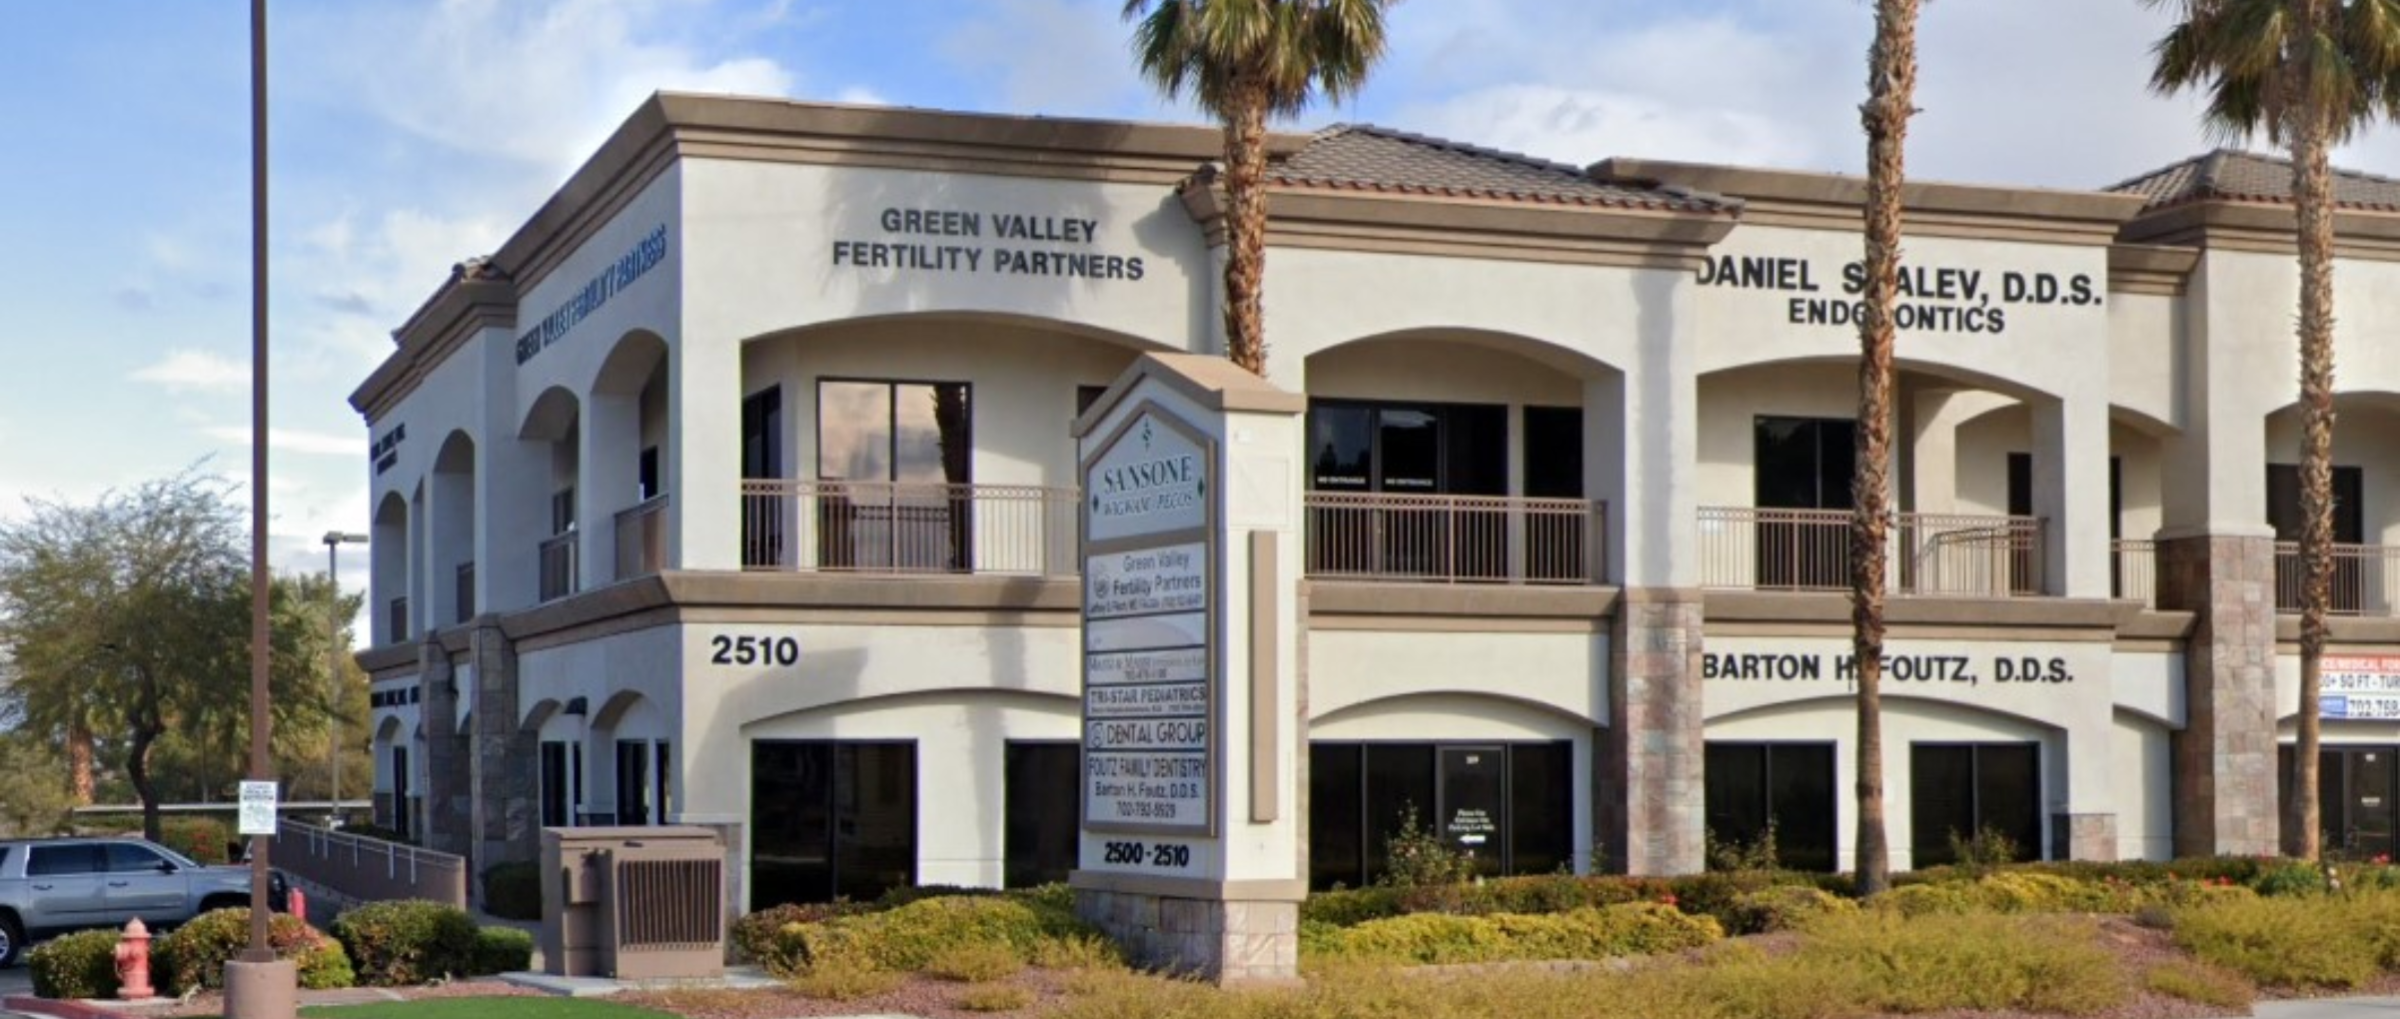 Green Valley Fertility Partners exterior